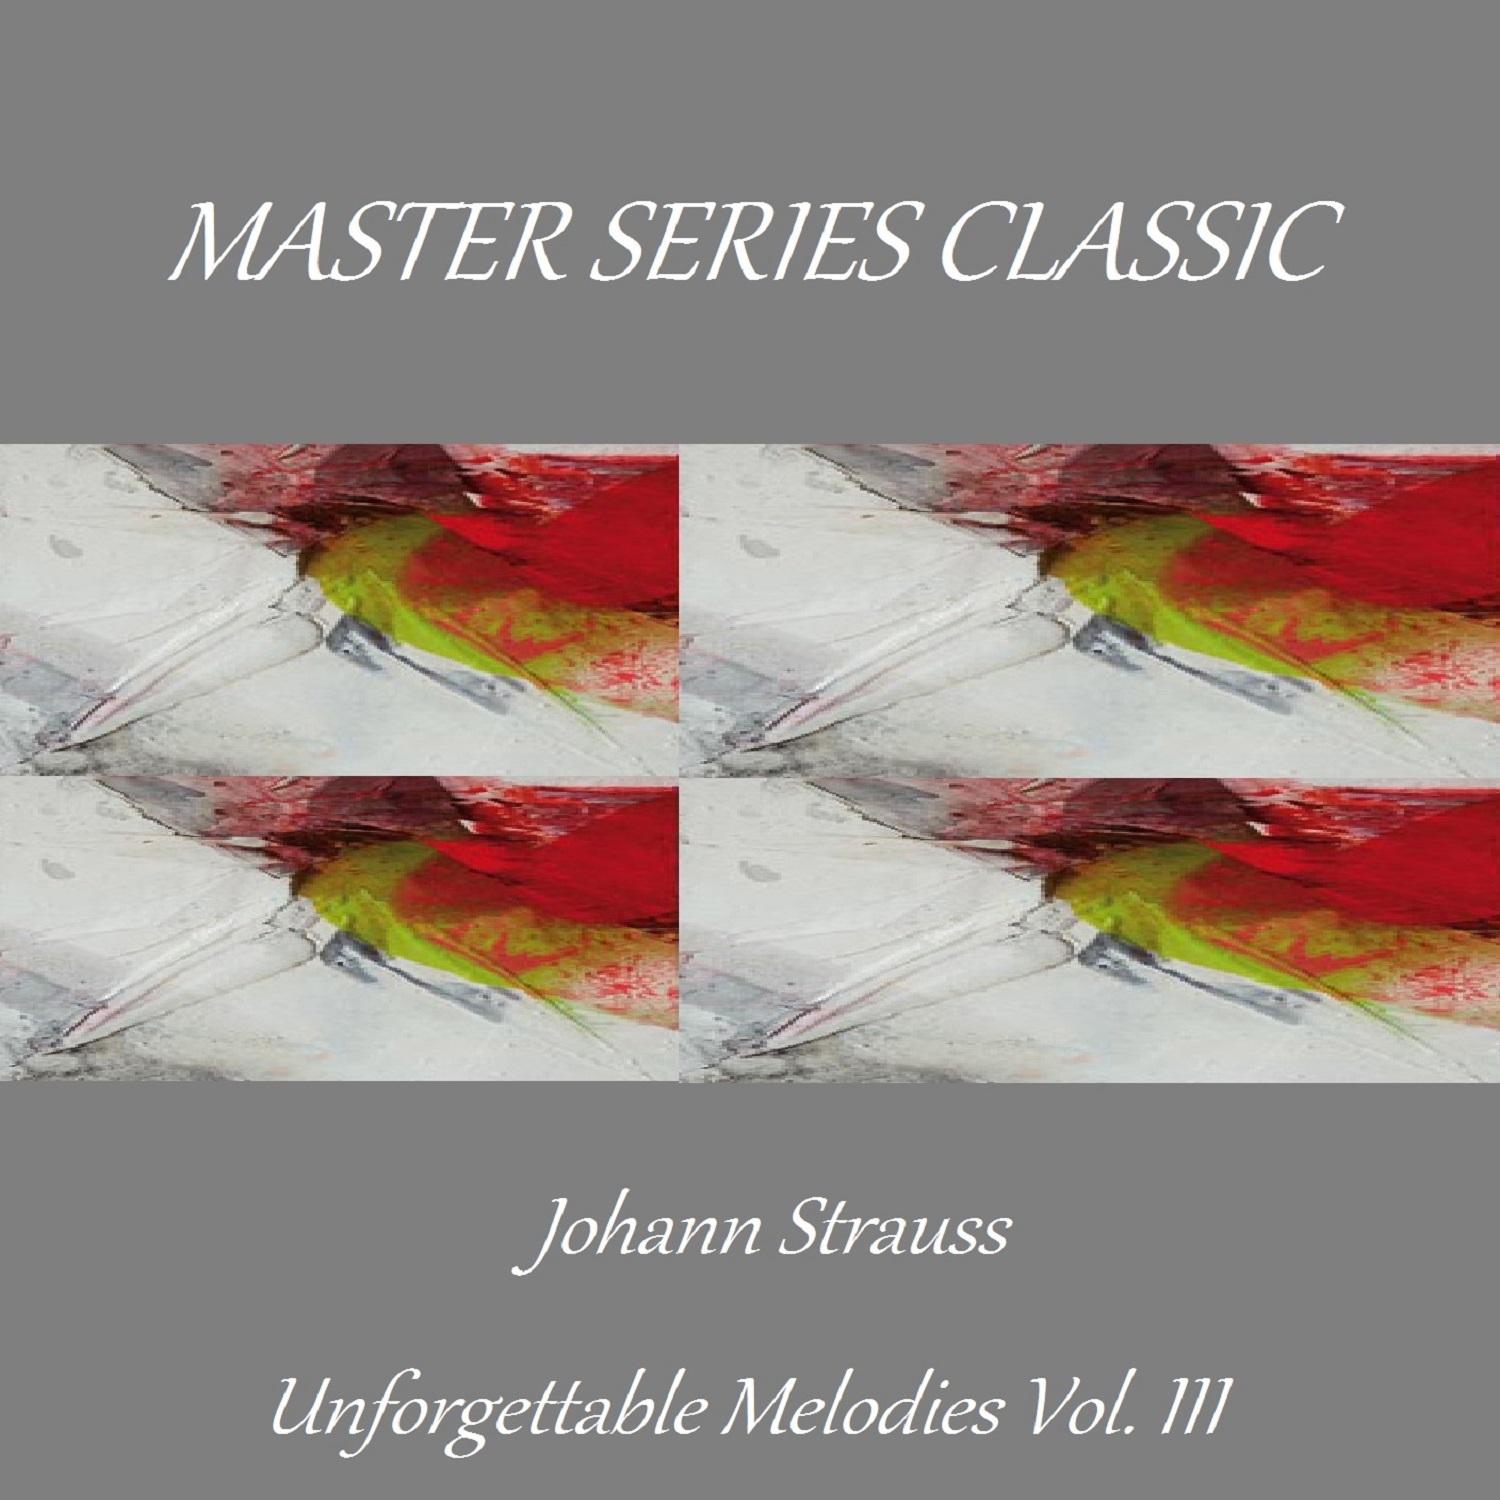 Master Series Classic - Johann Strauss - Unforgettable Melodies Vol. Ill